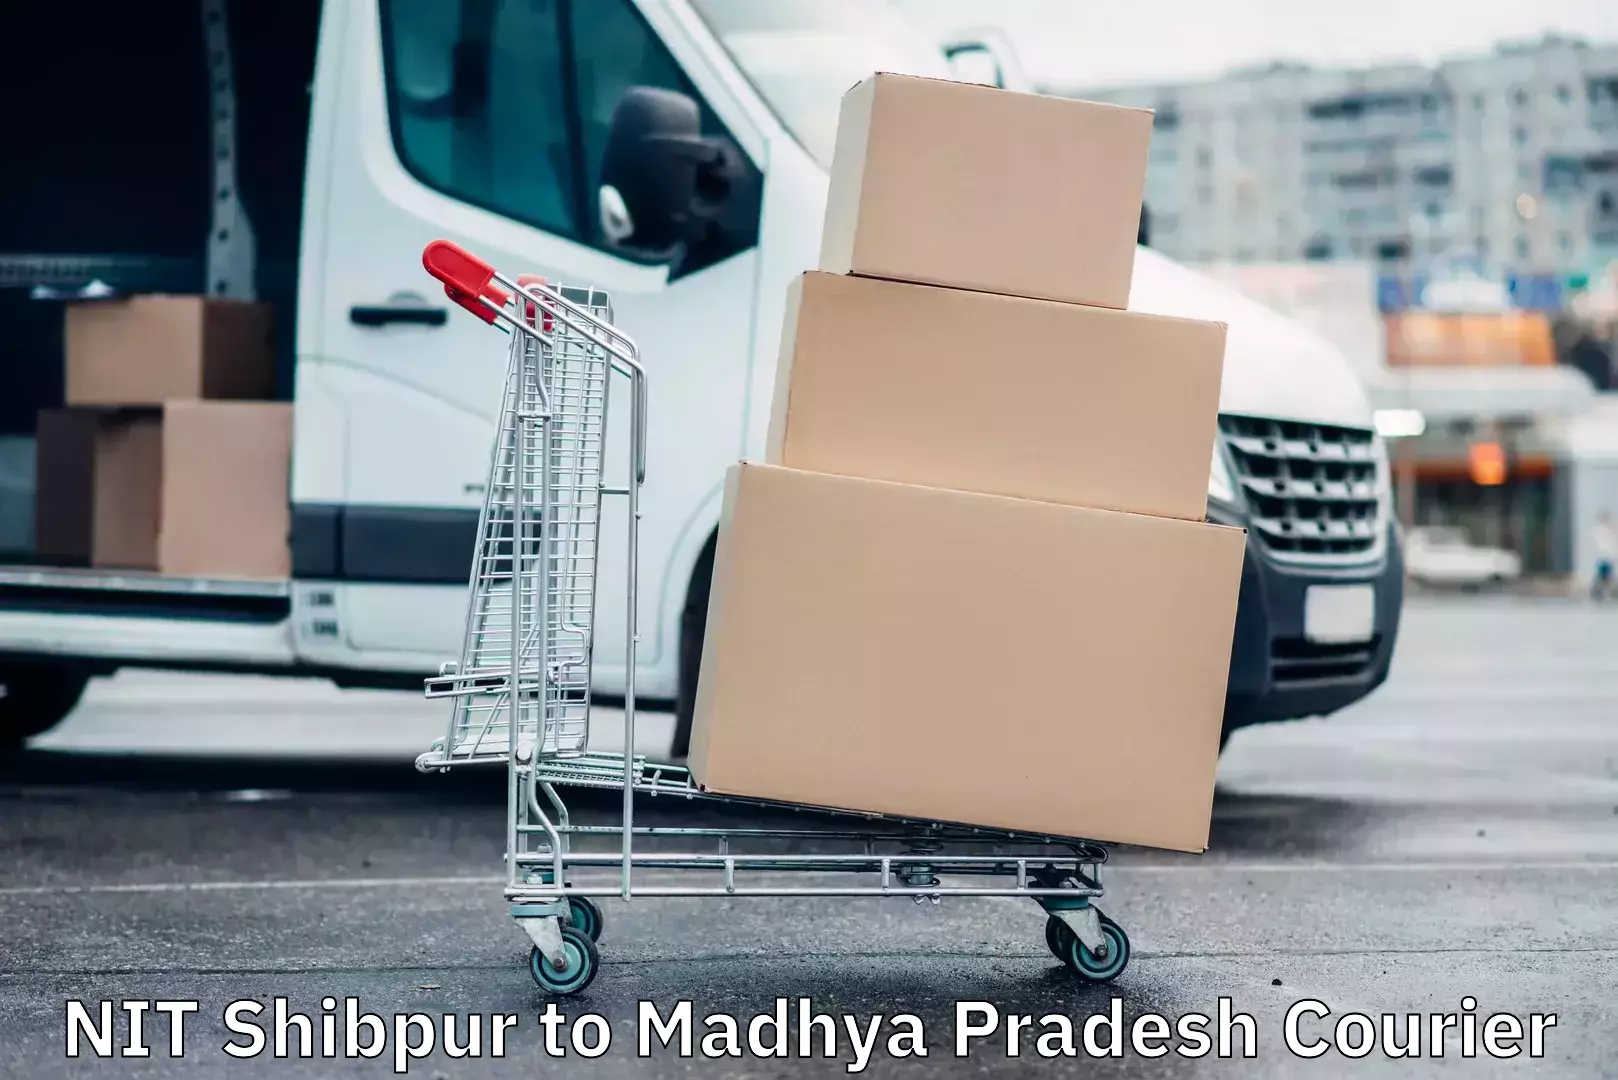 24/7 courier service NIT Shibpur to Madhya Pradesh